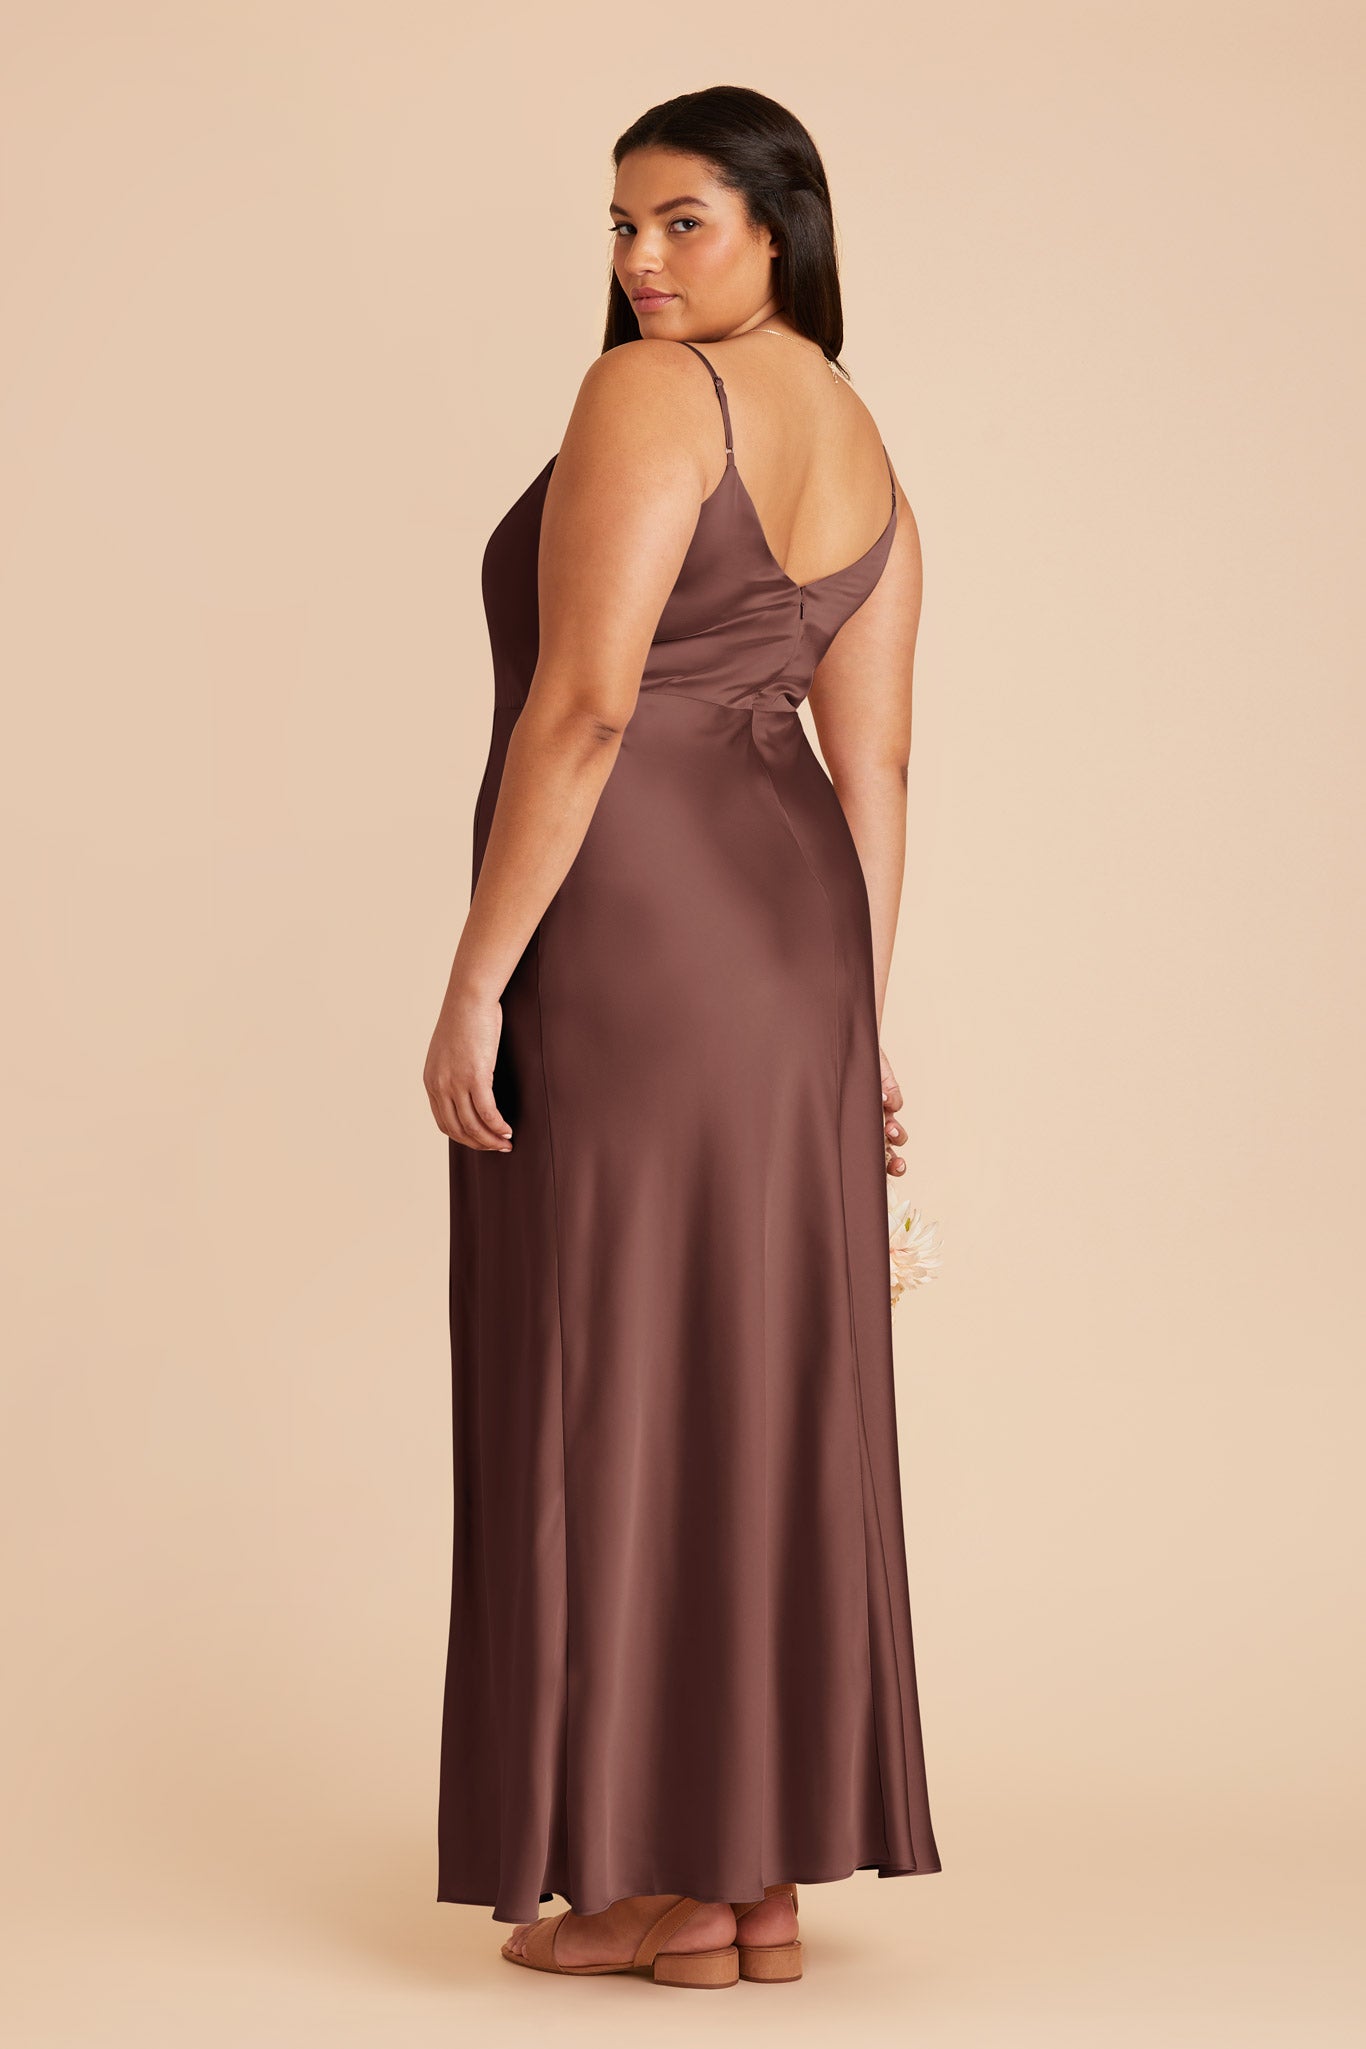 Chocolate Brown Jay Matte Satin Dress by Birdy Grey